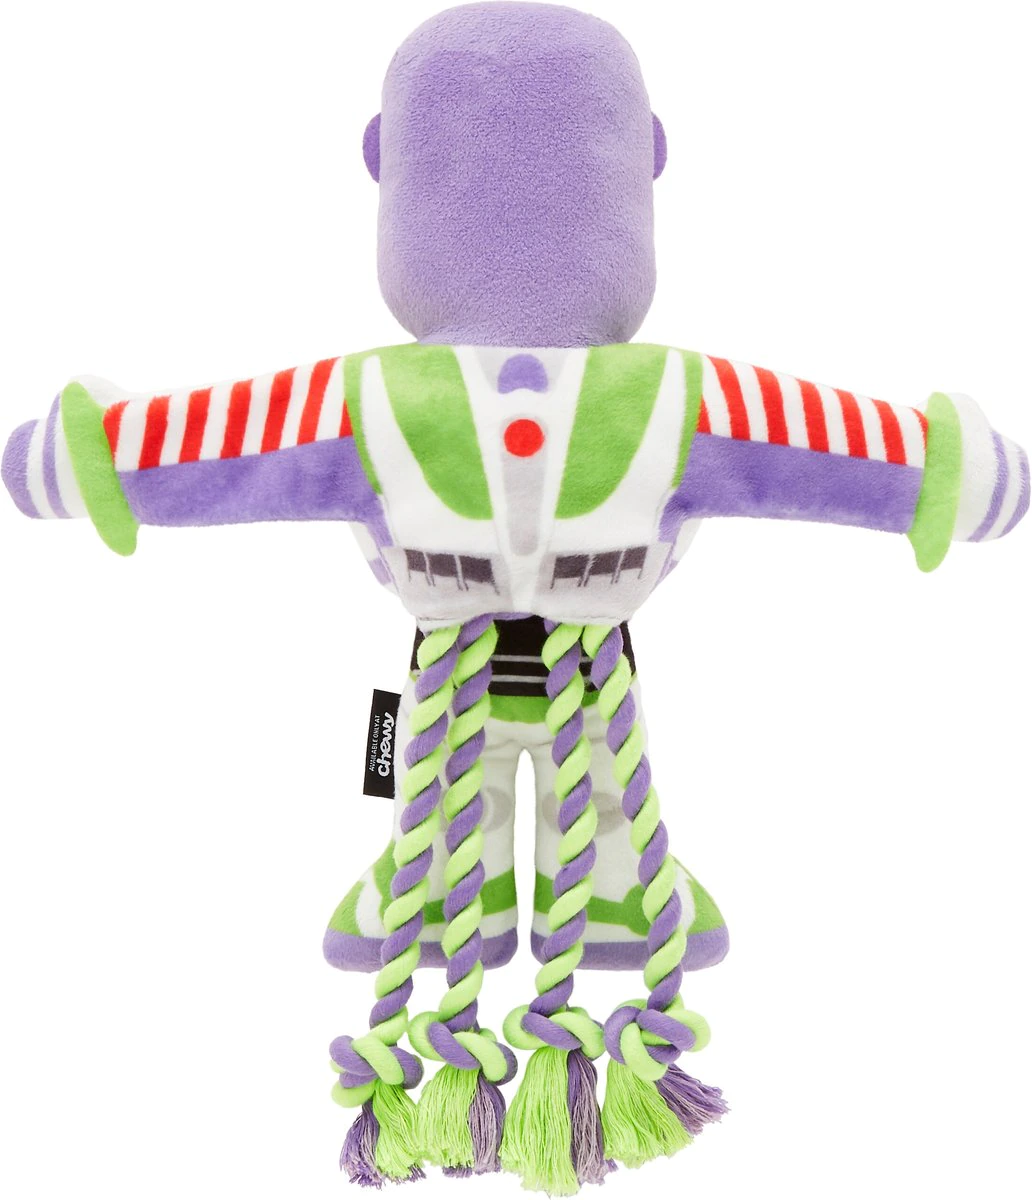 Disney Pixar Buzz Lightyear Plush with Rope Squeaky Dog Toy 巴斯光年拉繩發聲玩具